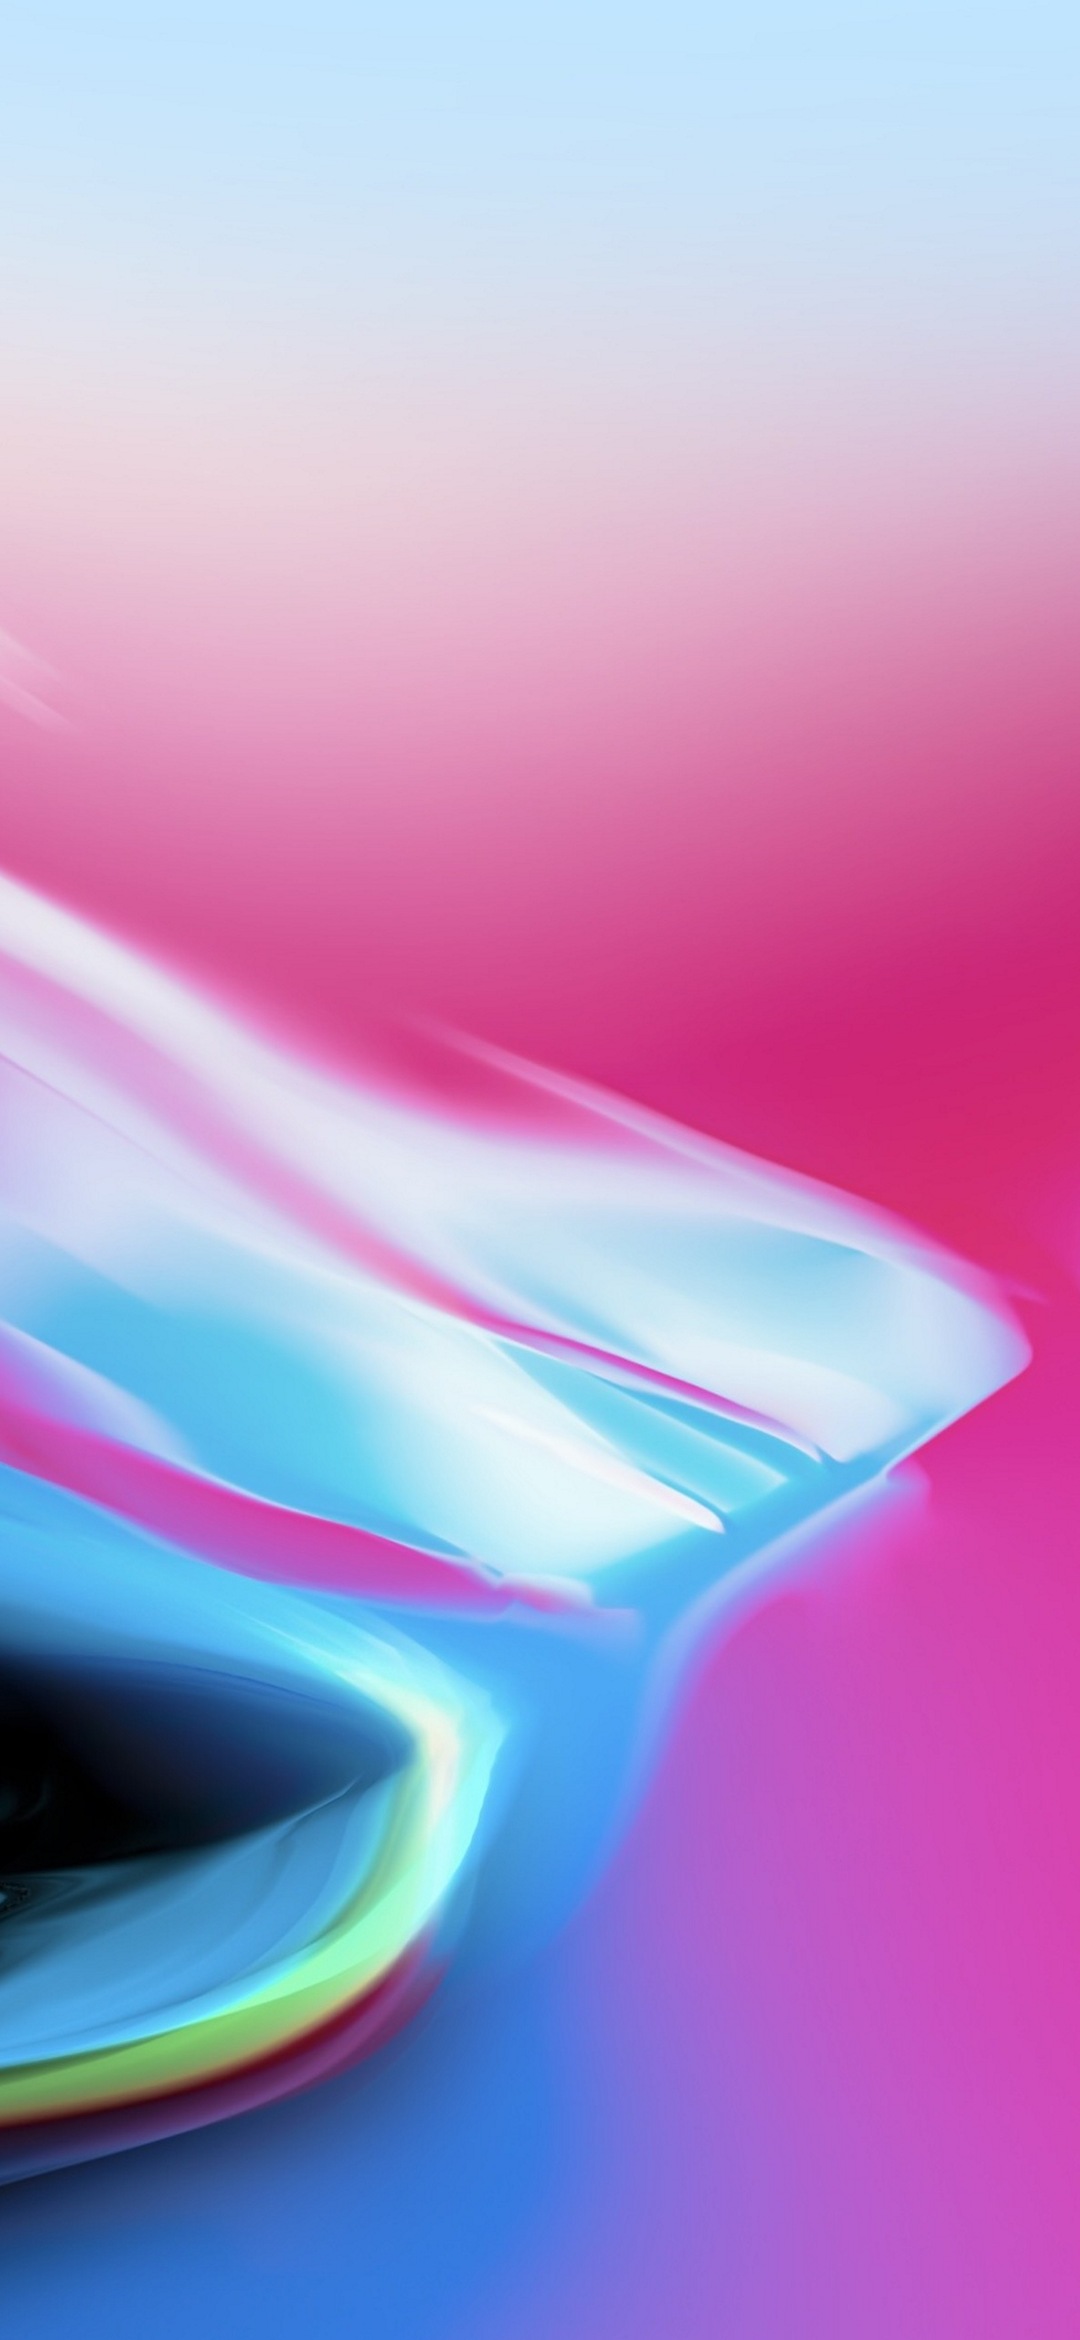 Bright pink and light blue liquid RedMagic 5 Android 壁紙・待ち受け